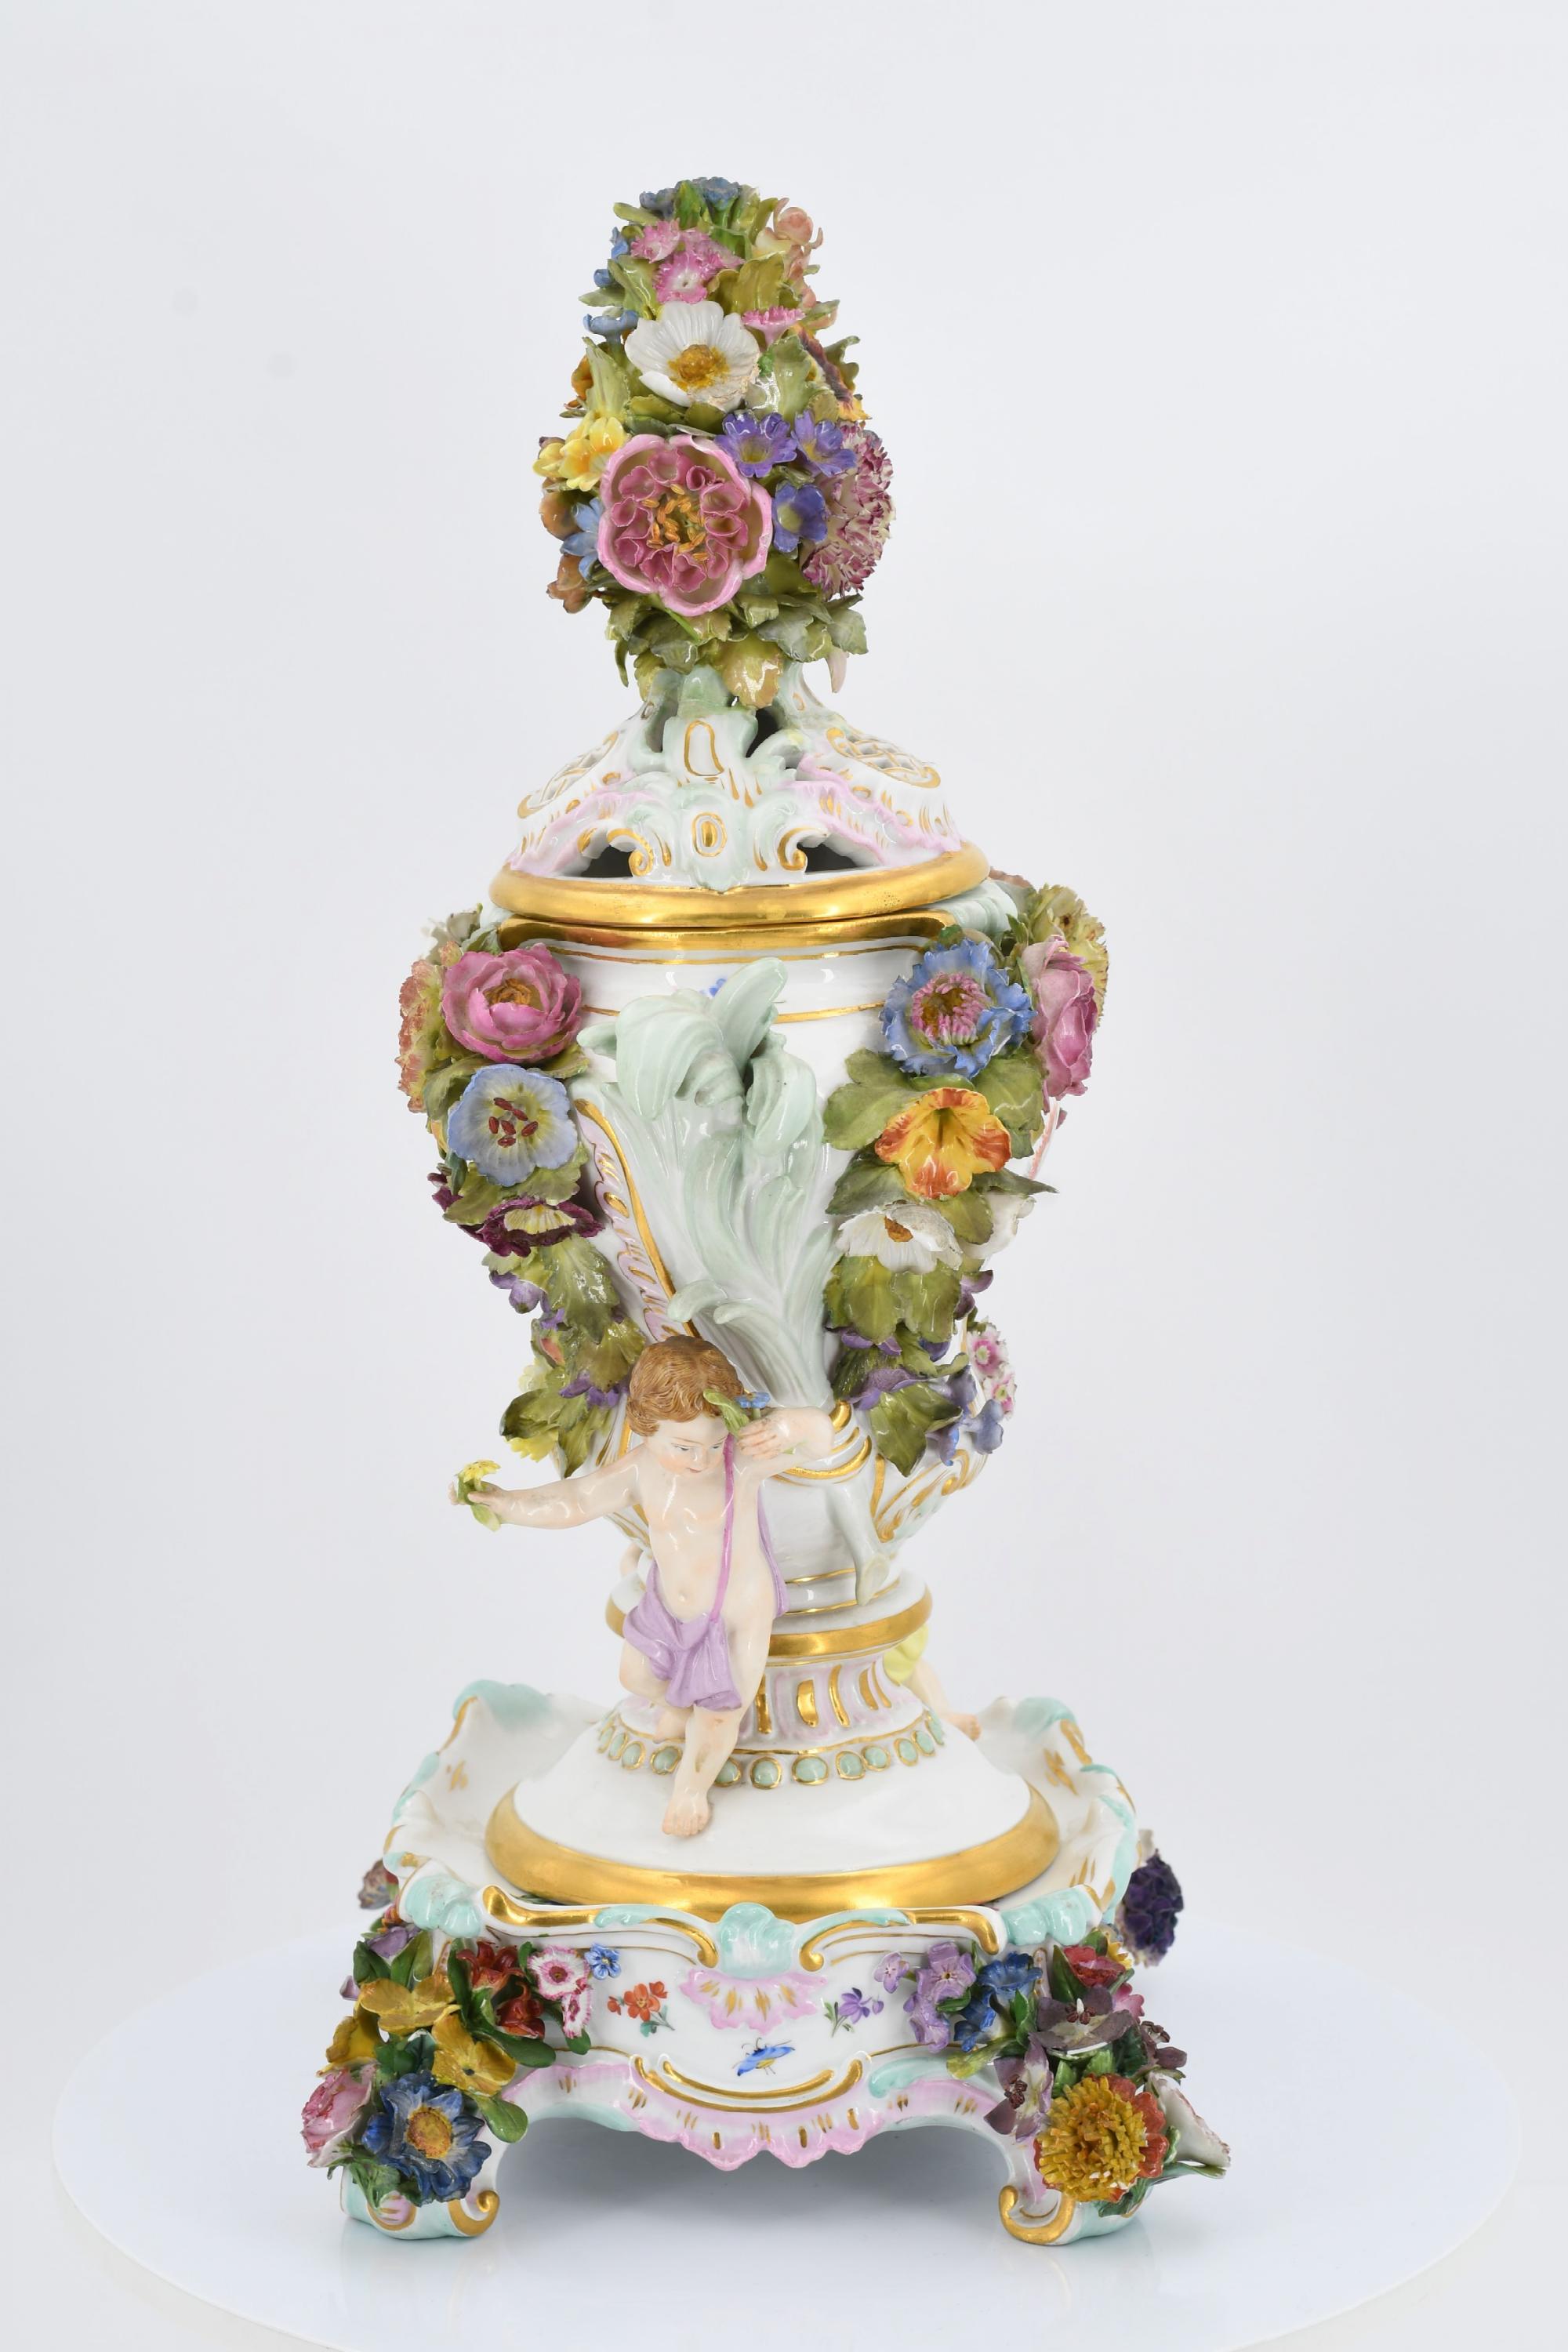 Small potpourri vase on pedestal - Image 3 of 9